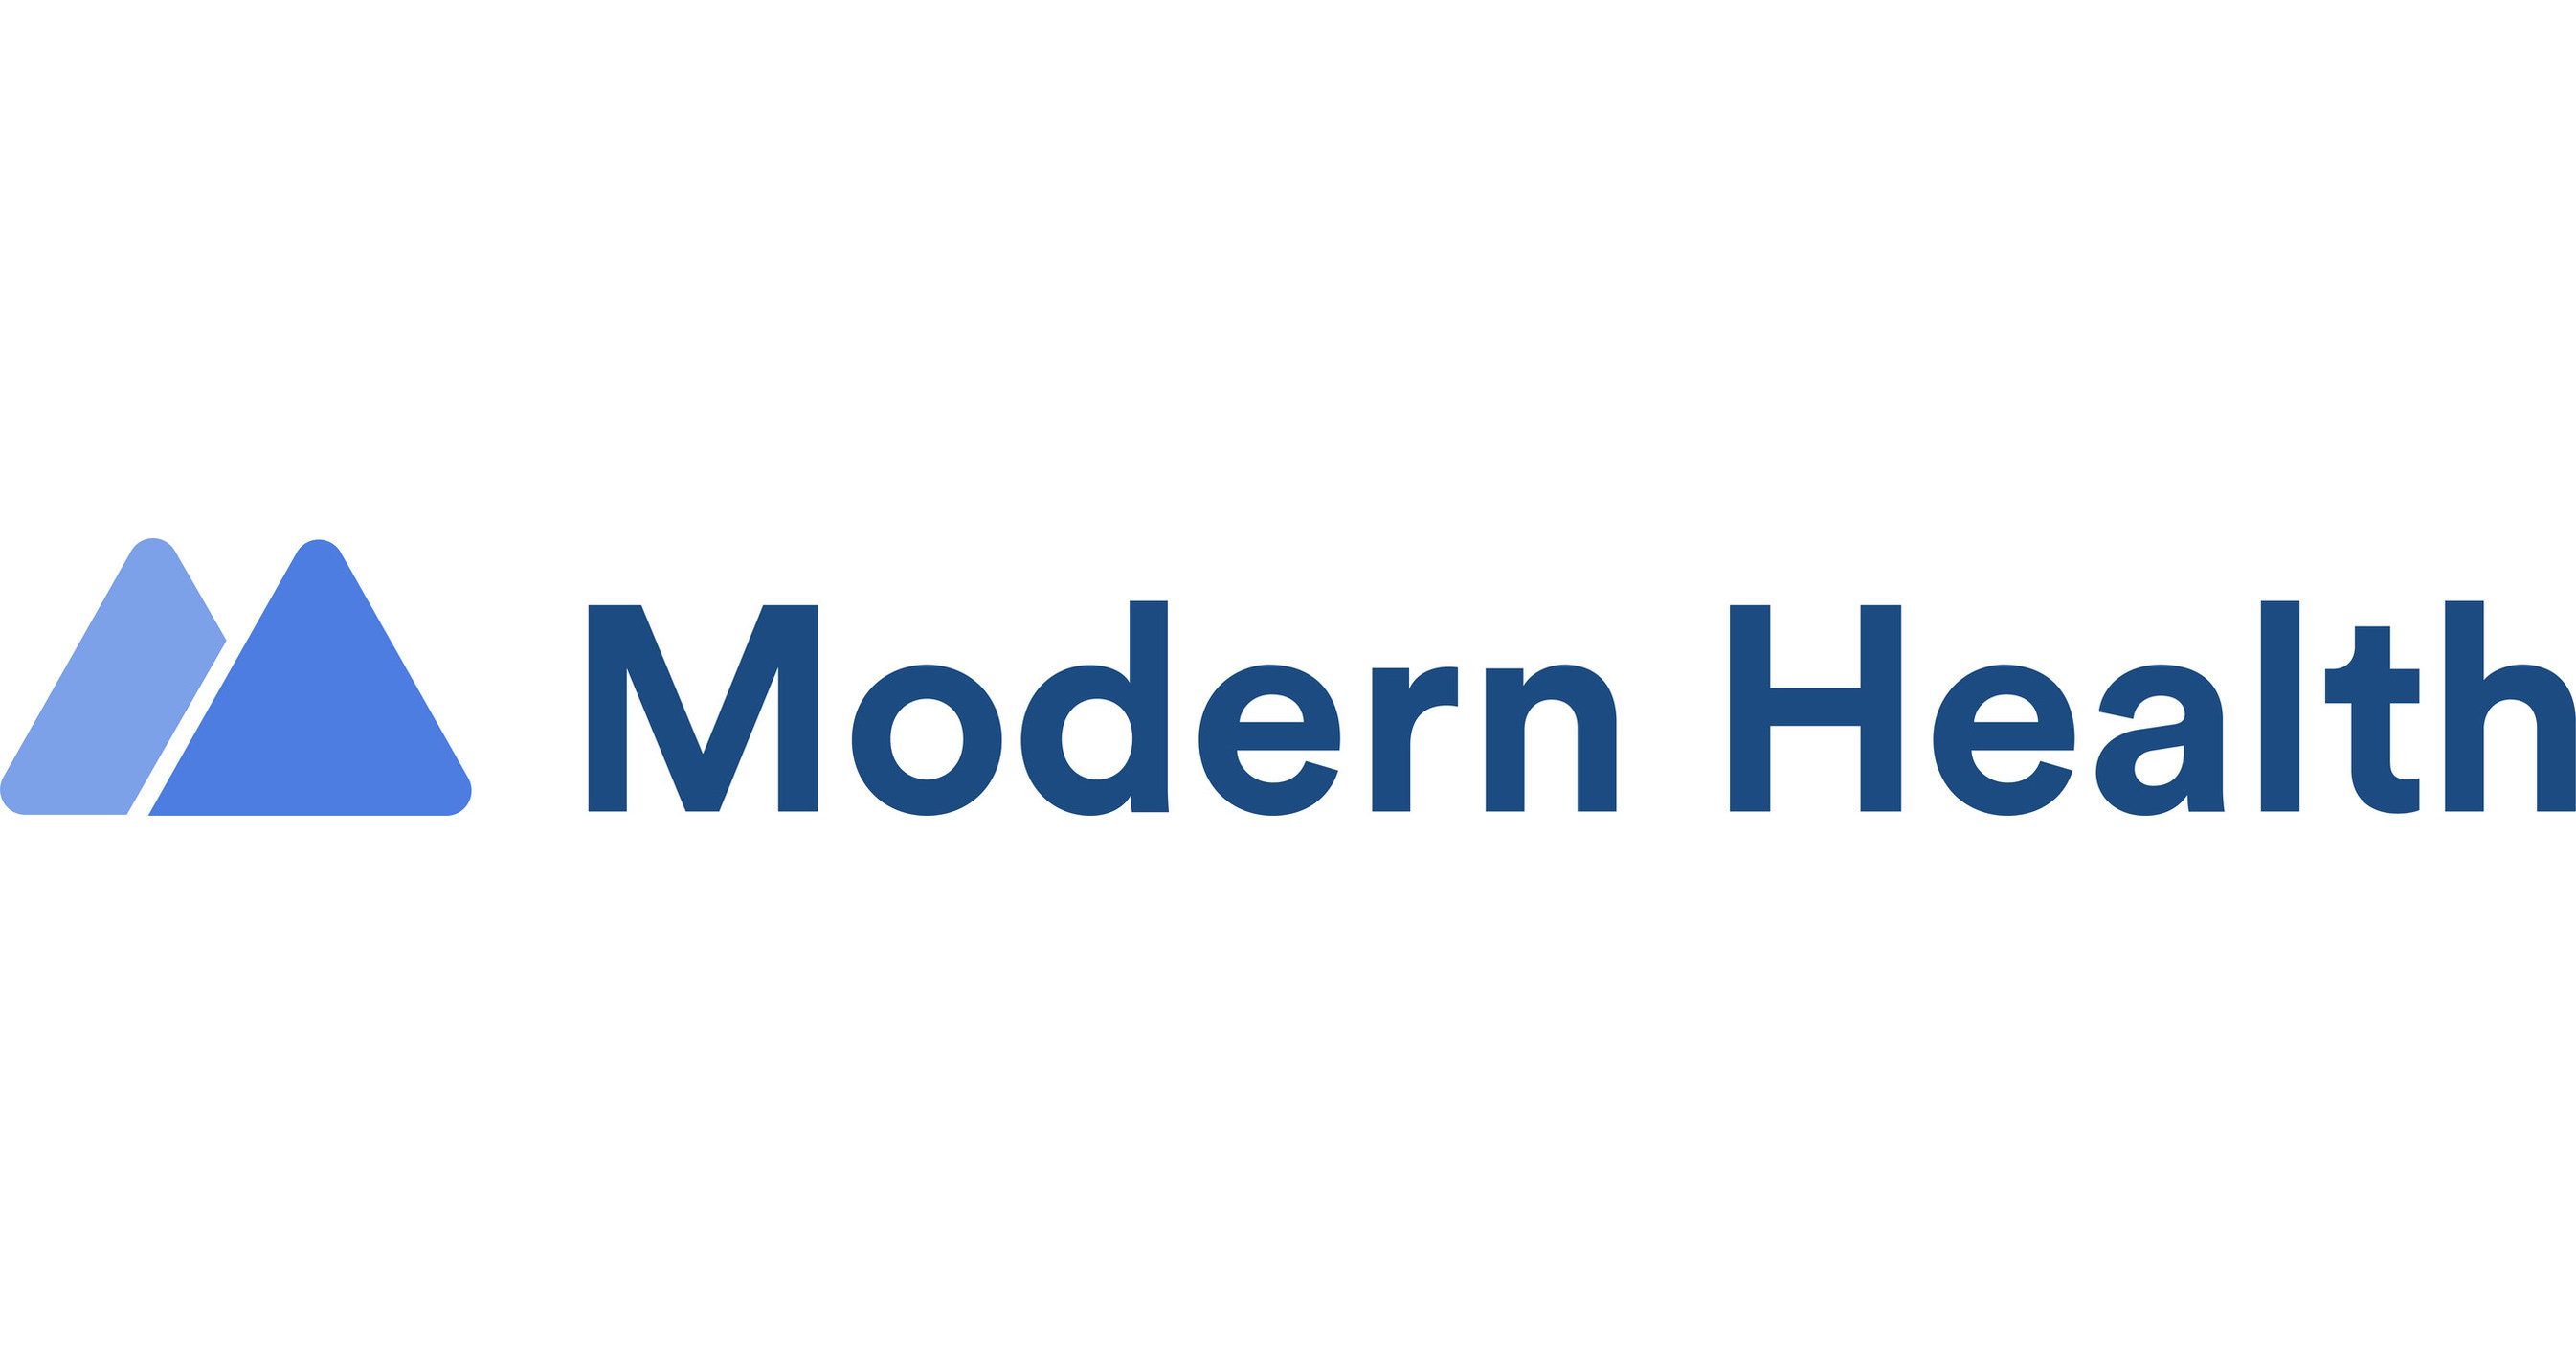 Modern Health Announces Close of $31M Series B Round